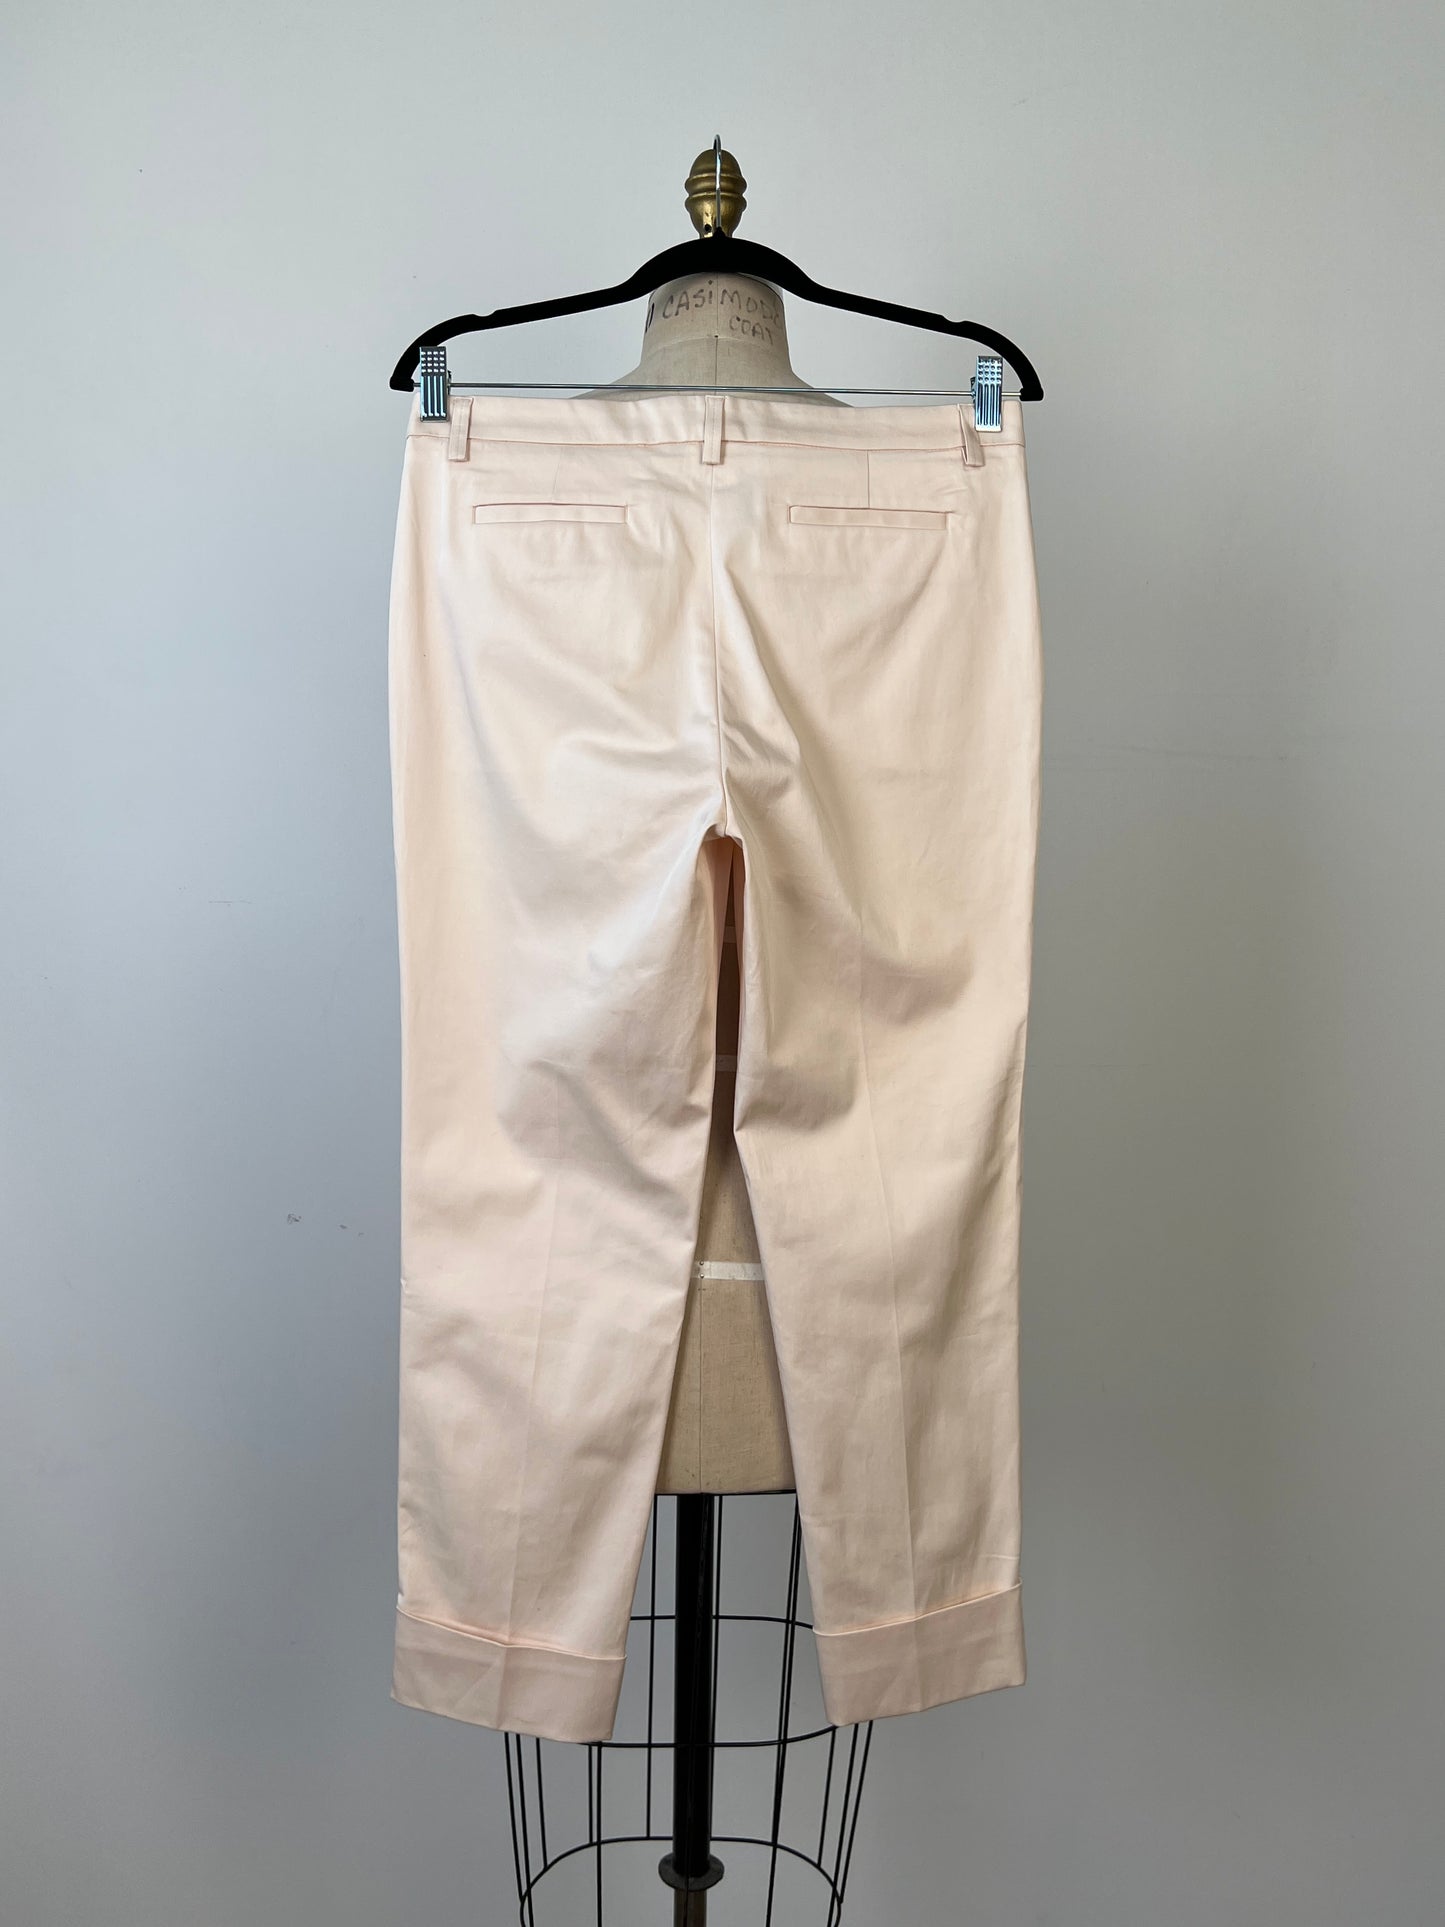 Pantalon rose pâle à revers et strass (6)